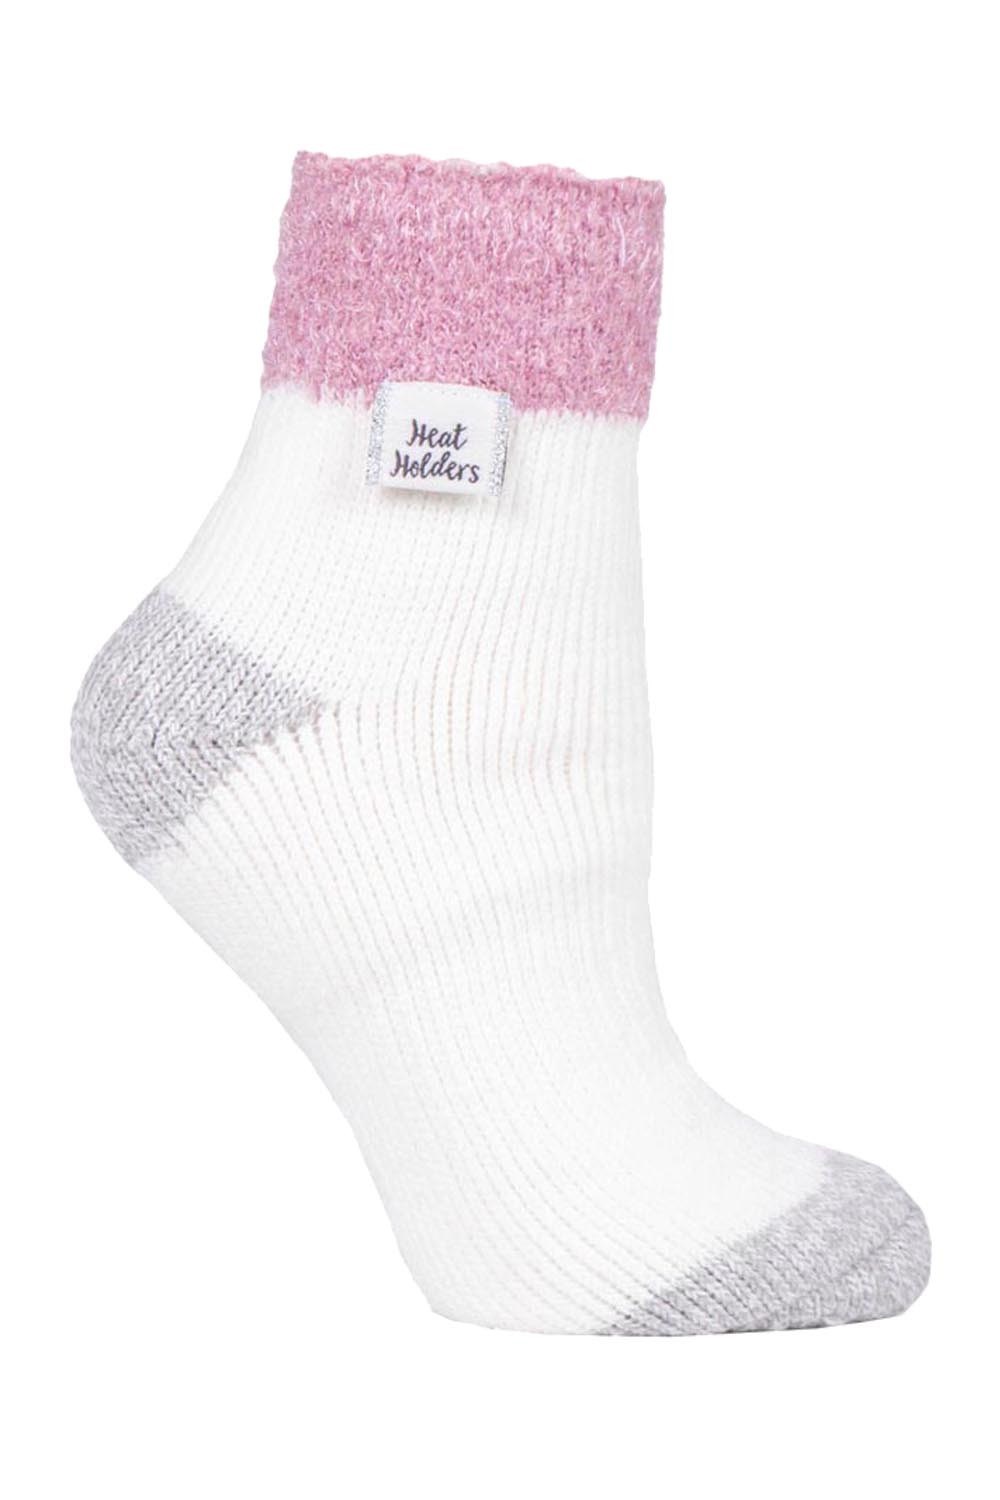 Womens Thermal Winter Bed Socks -